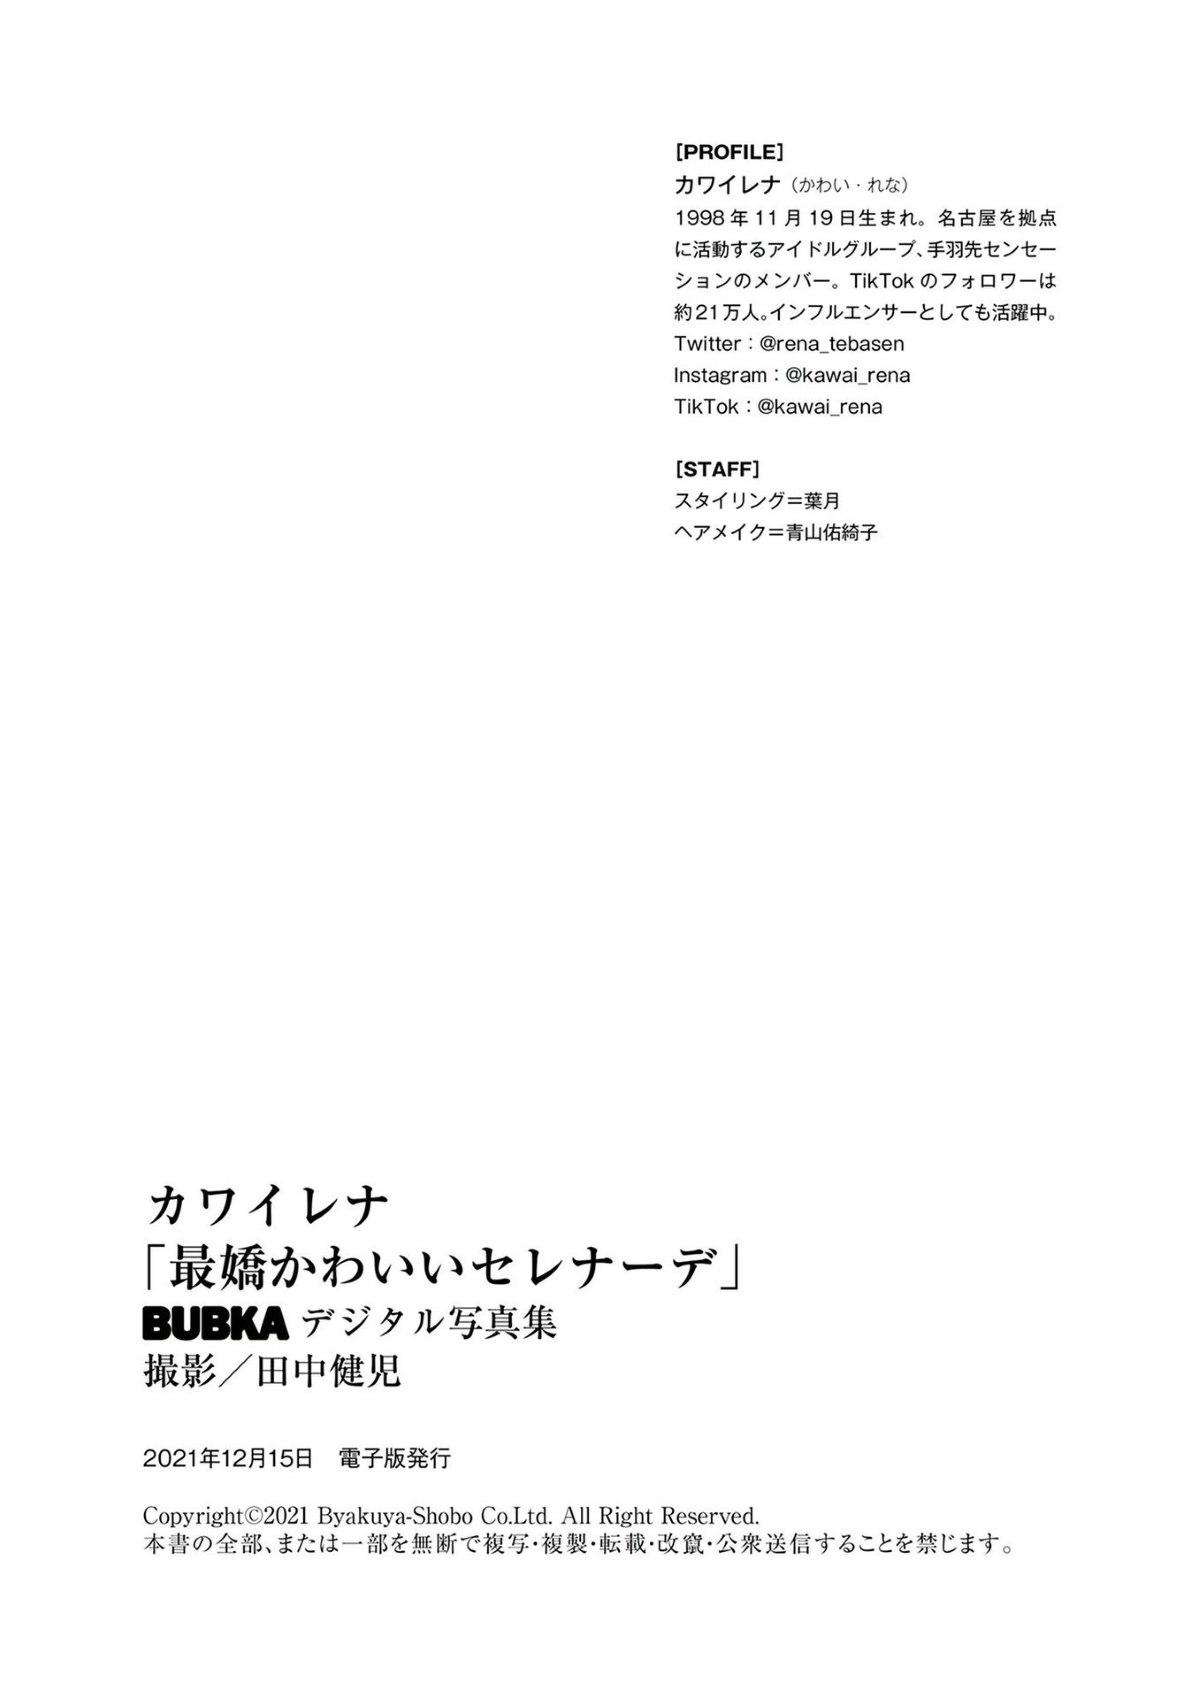 BUBKA Photobook 2021 12 24 Rena Kawai カワイレナ Saikyo Kawai Serenade 0041 8579755938.jpg